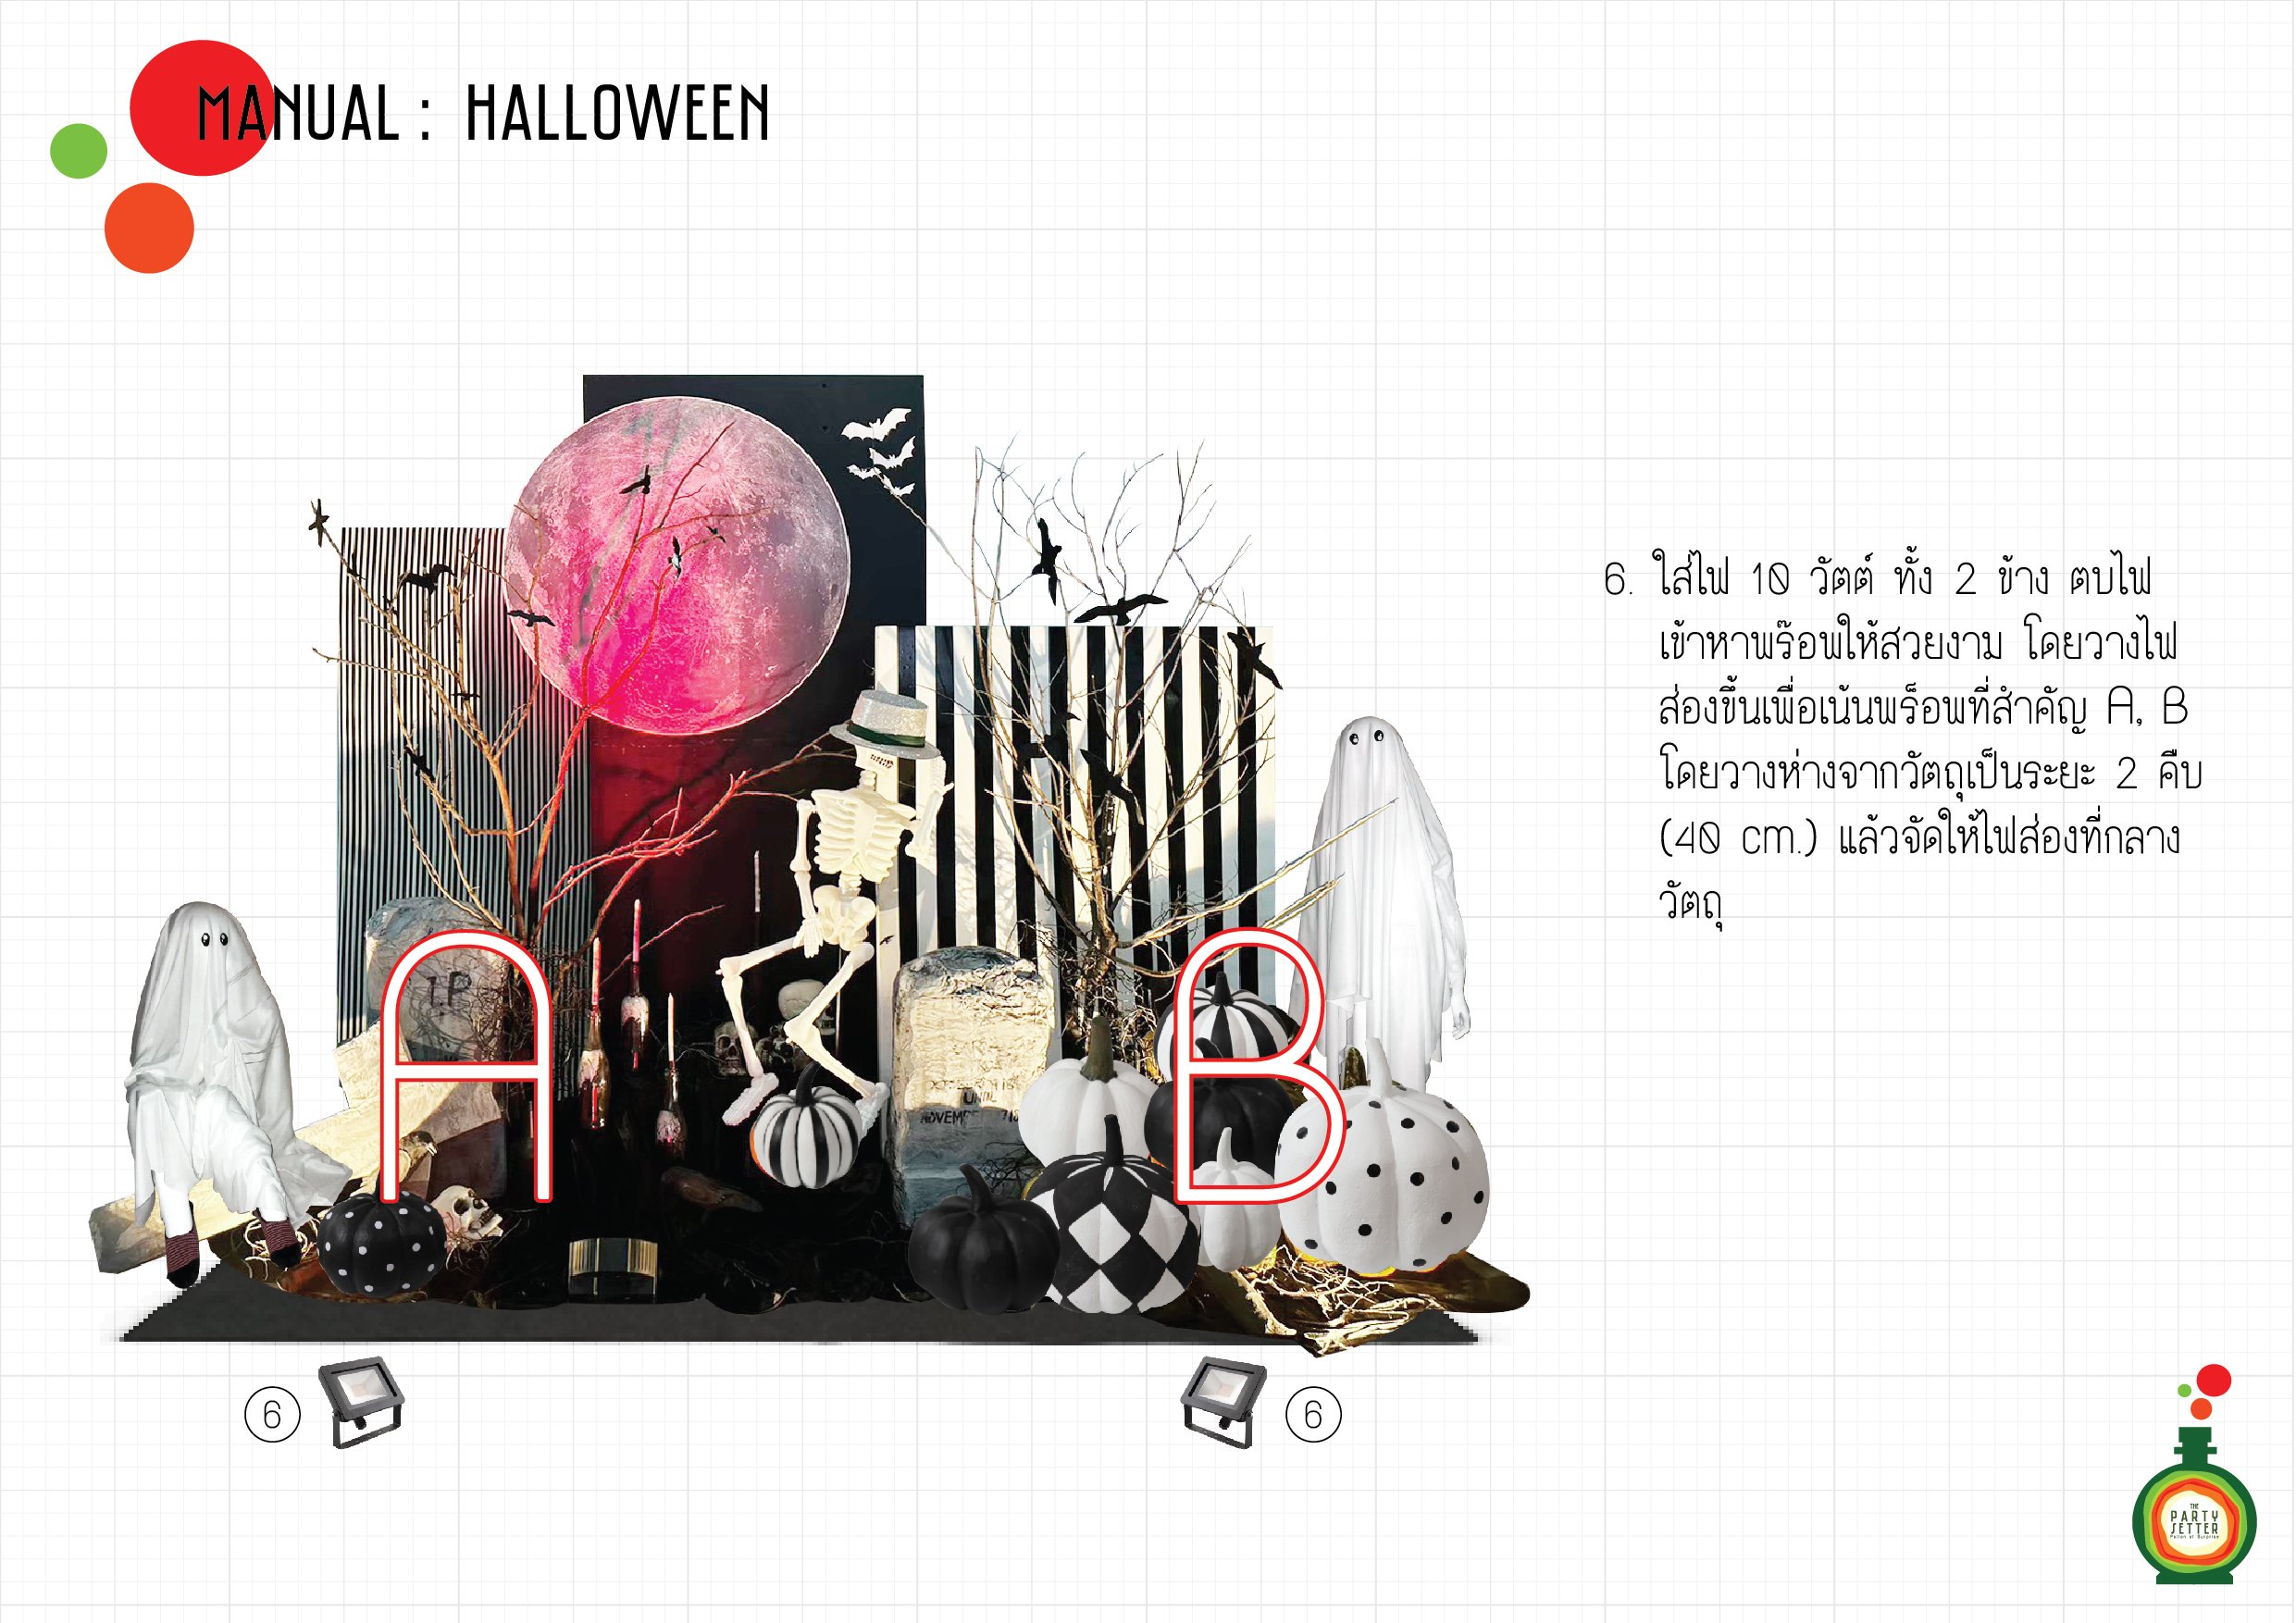 Manual_Halloween_03-06-01.jpg